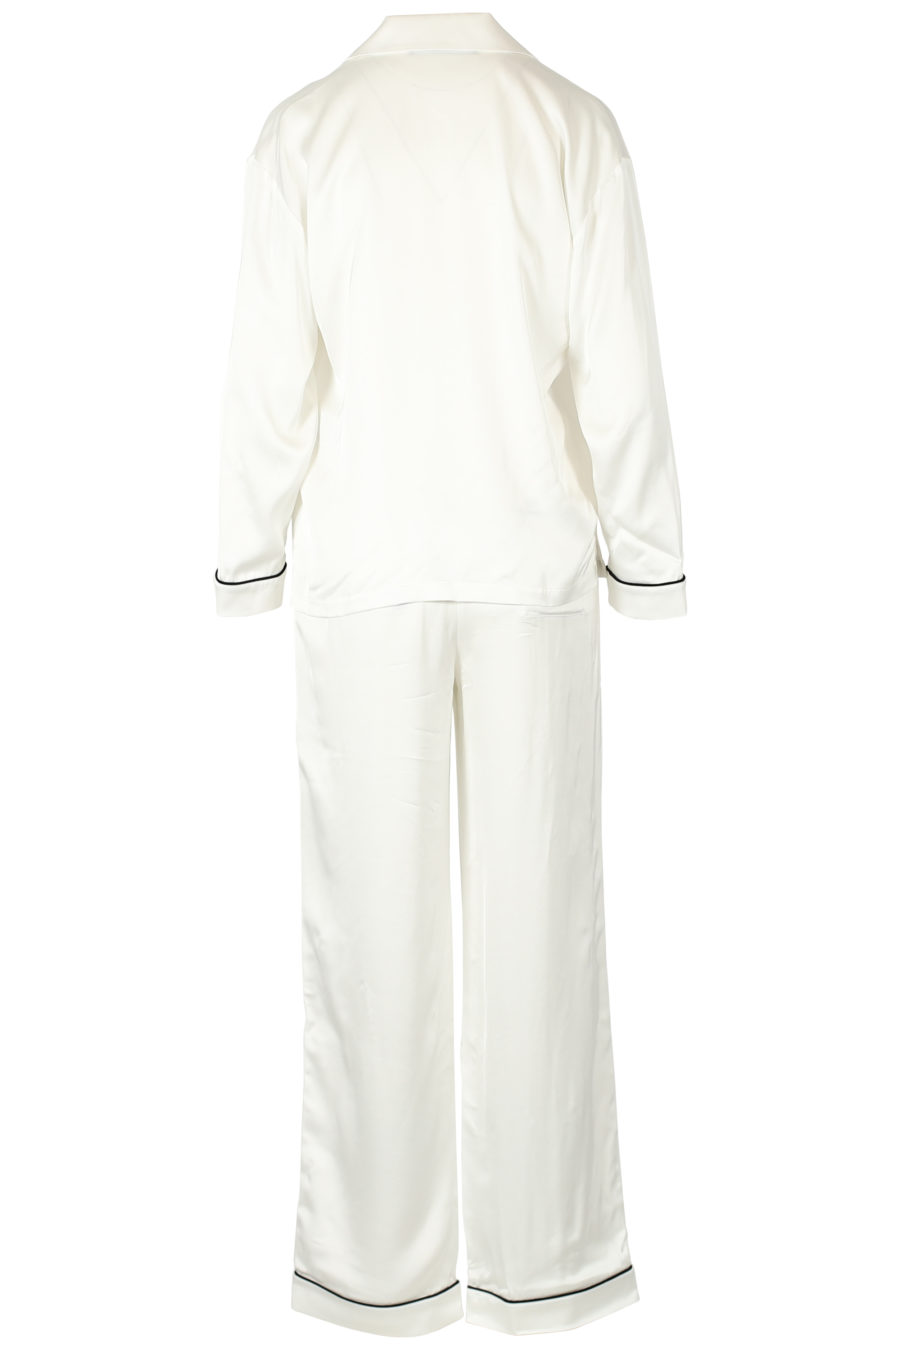 White satin pyjama gift set - IMG 3296